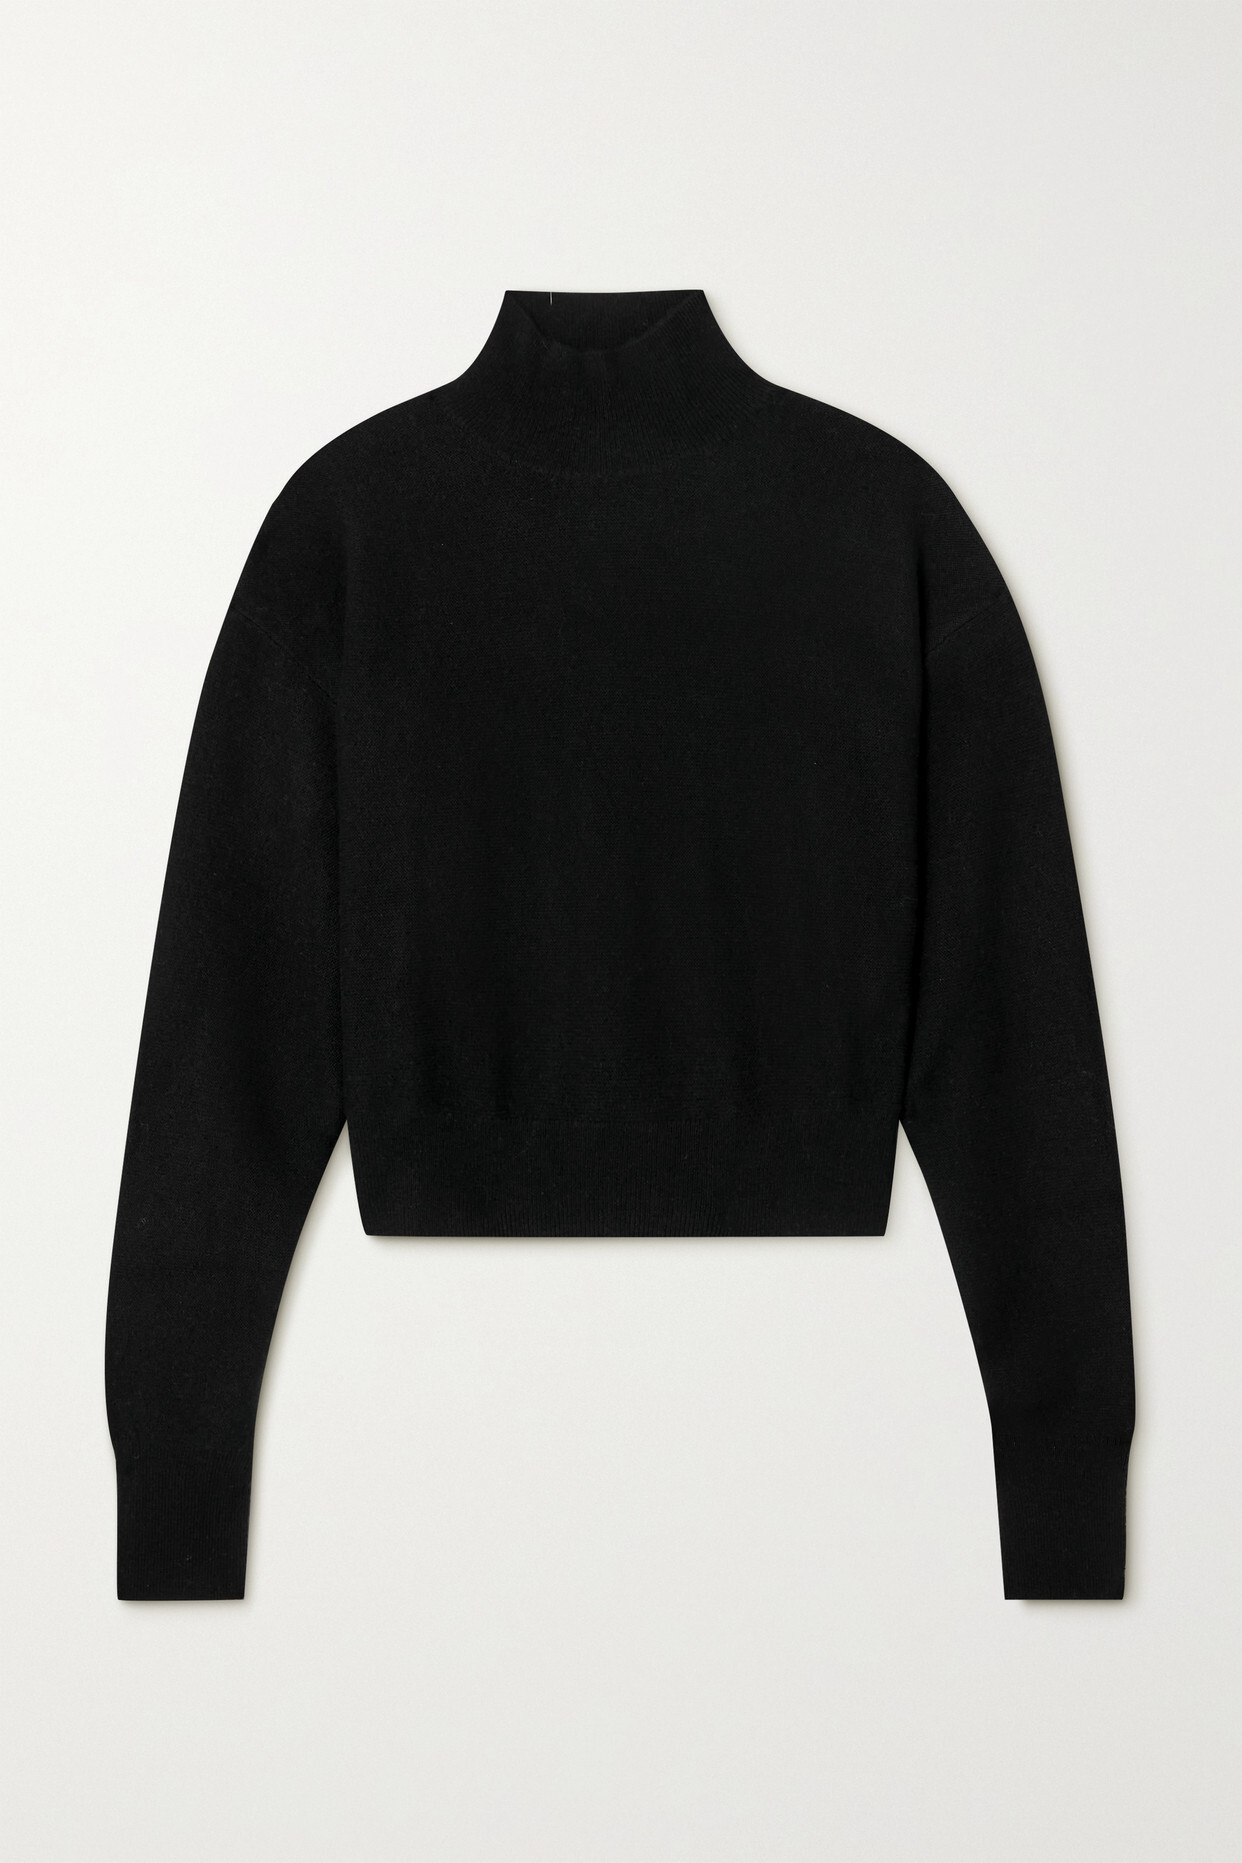 Le Kasha - + Net Sustain Baleari Organic Cashmere Turtleneck Sweater - Black